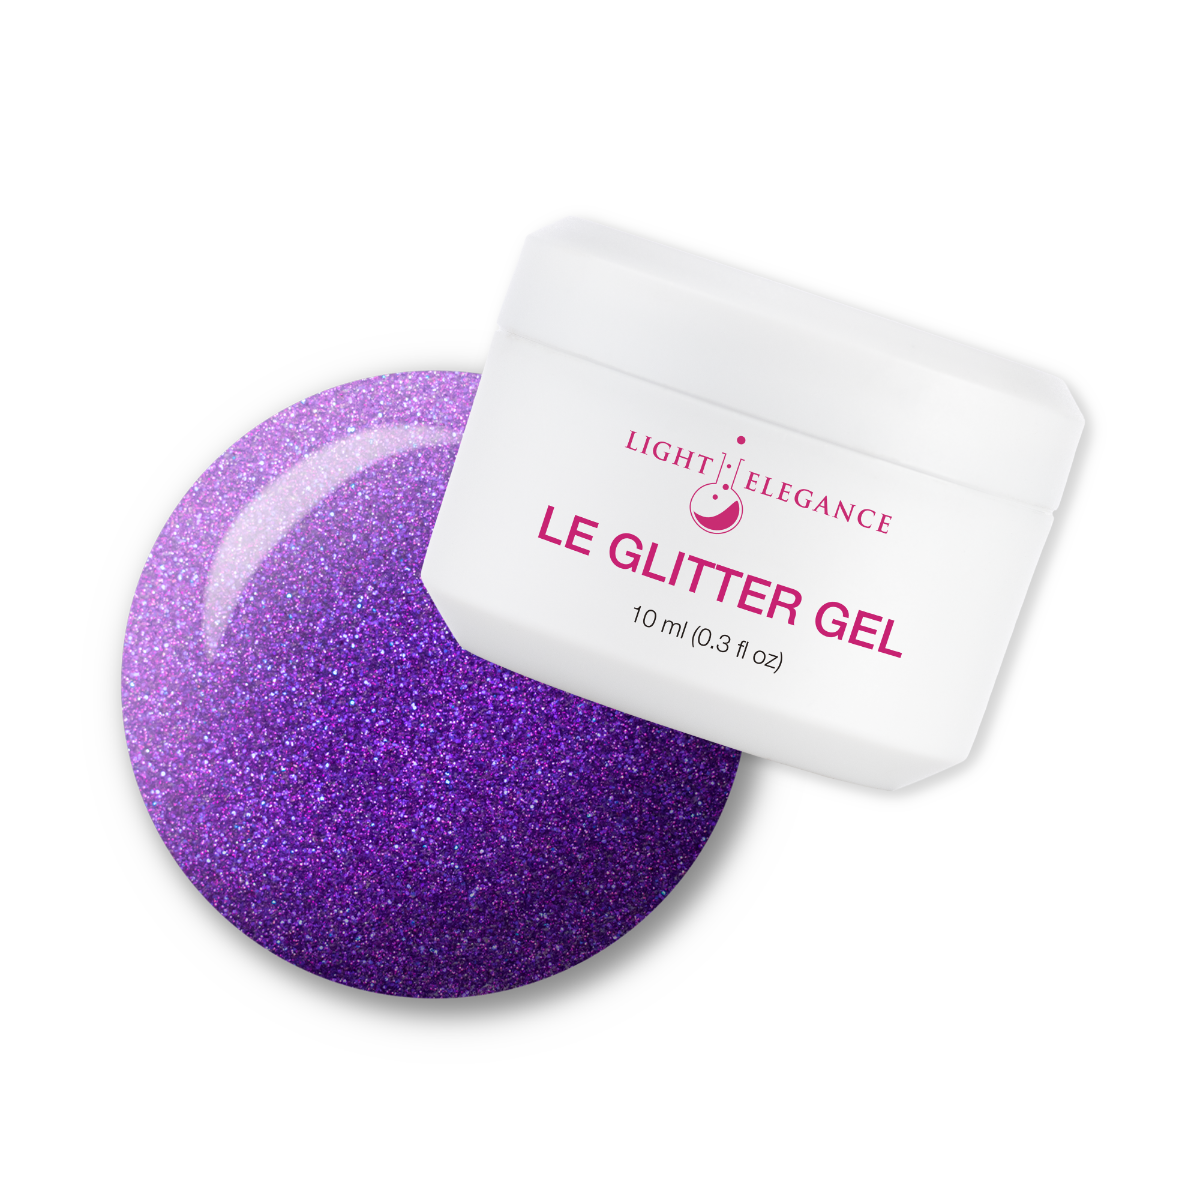 Light Elegance Glitter Gel - Amethyst Kiss :: New Packaging